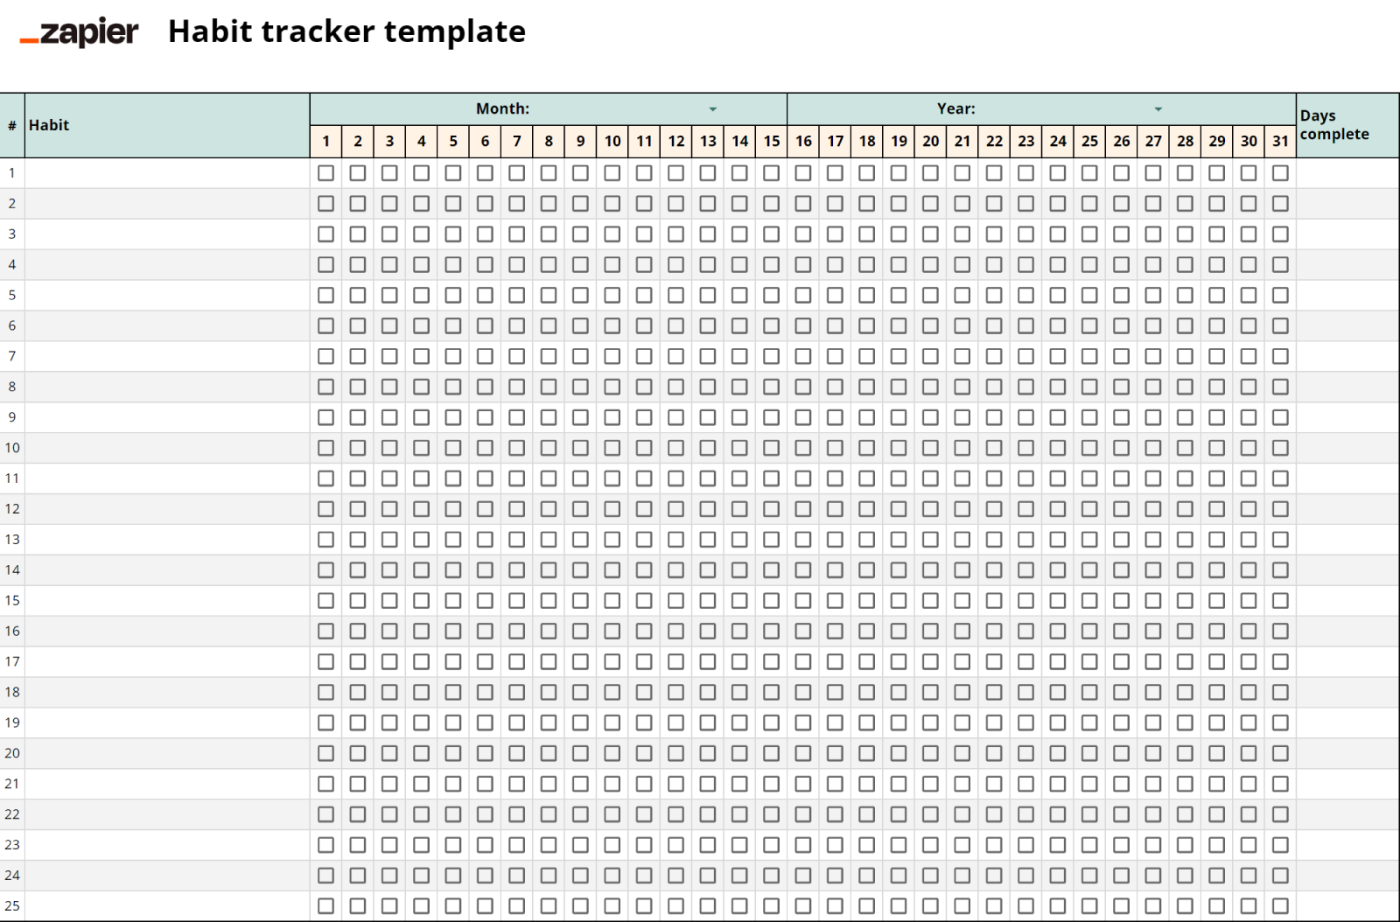 Screenshot of Zapier’s habit tracker Google Sheets template